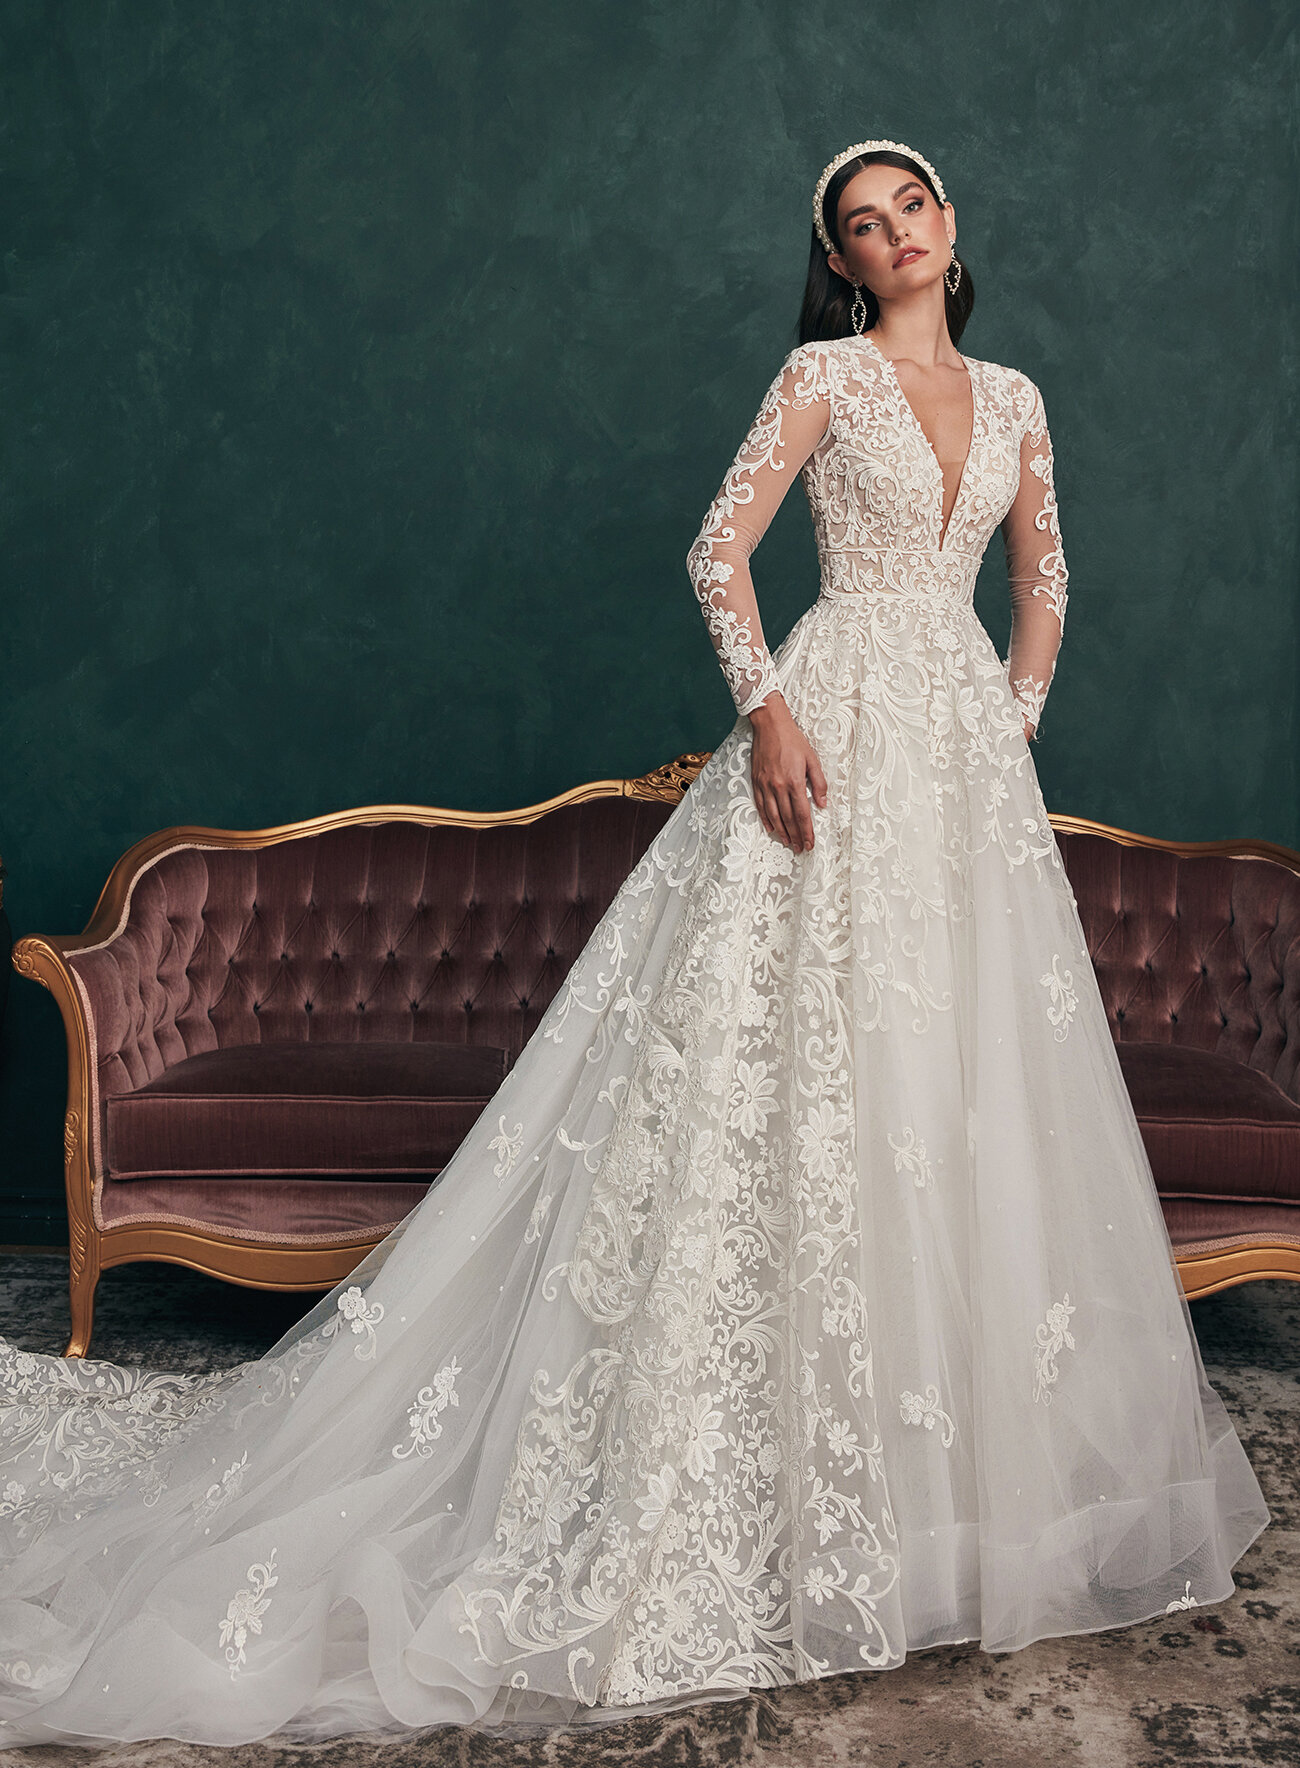 Model wearing Calla Blanche Saint long sleeve lace ball gown wedding dress.